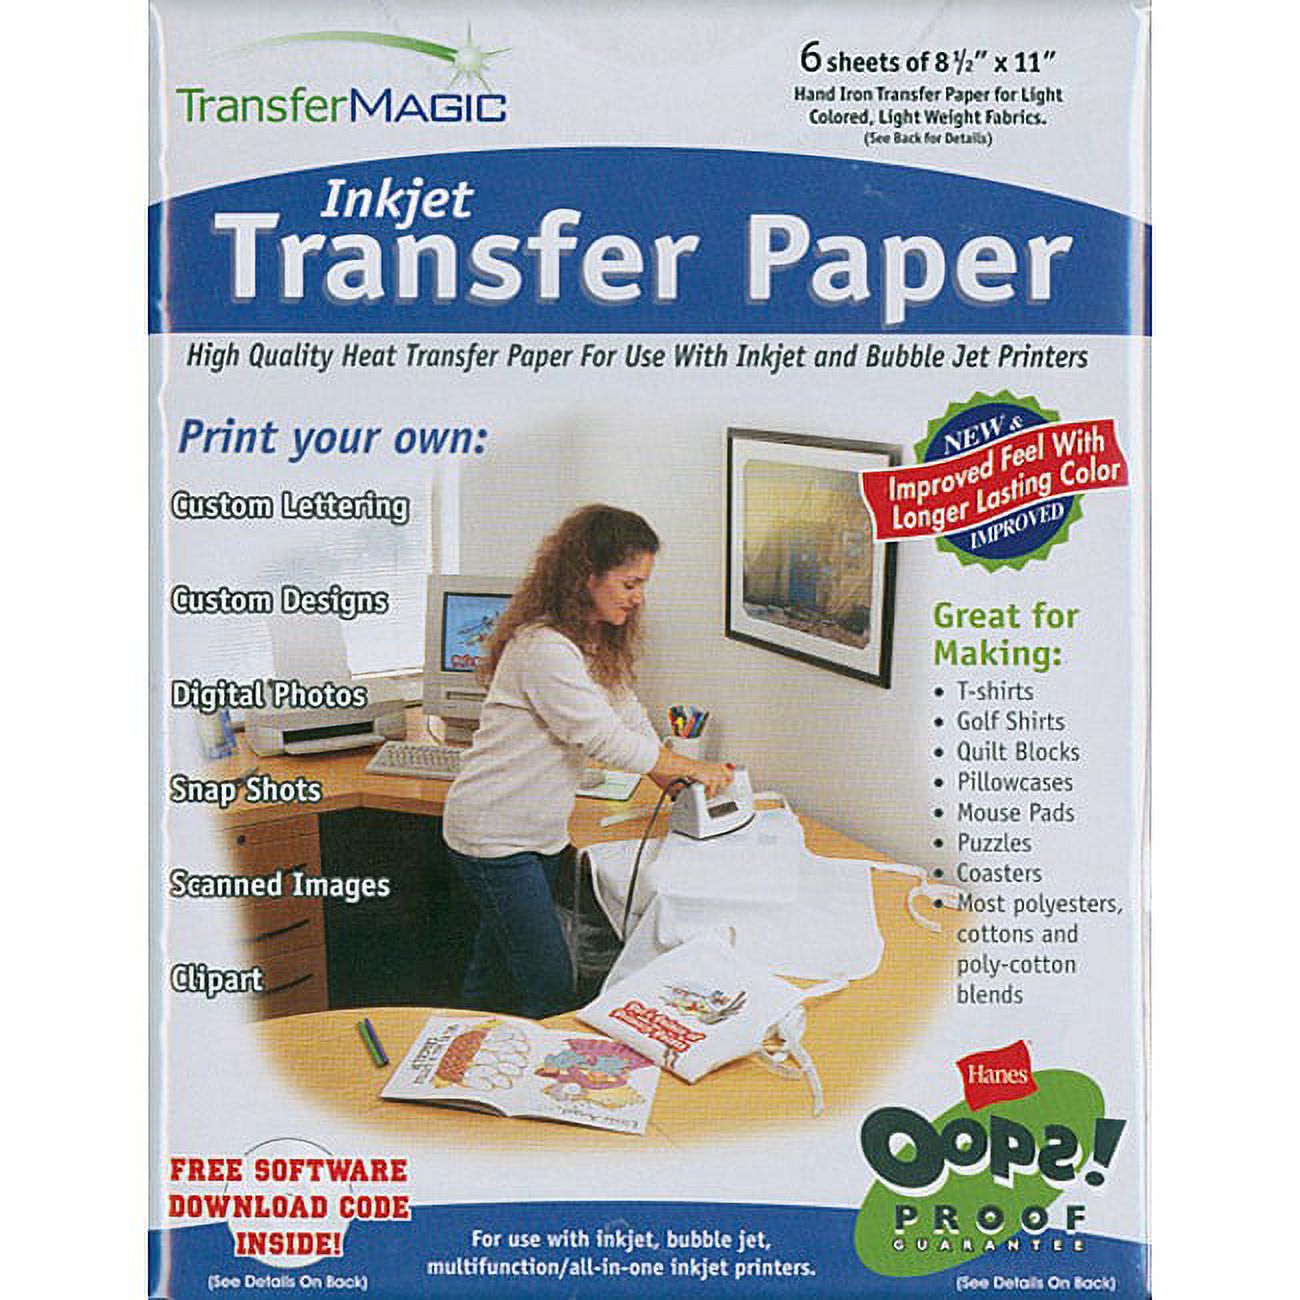 Transfer Magic Ink Jet Transfer Paper 6pc - image 3 of 3